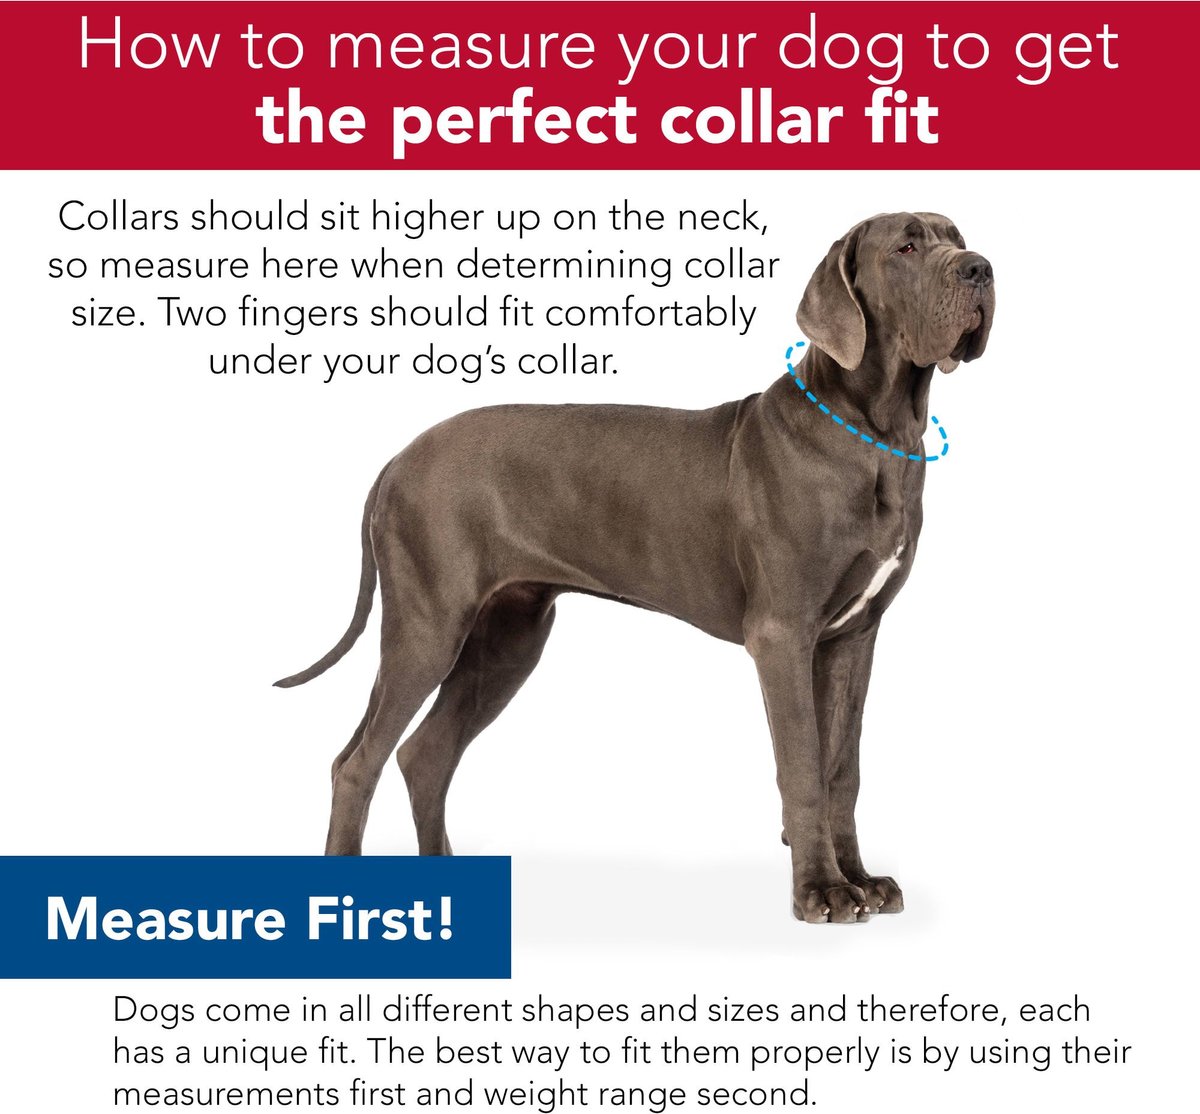 Sublime Adjustable Dog Collar, Flower Teal Stripe, 1-in x 12-18-in